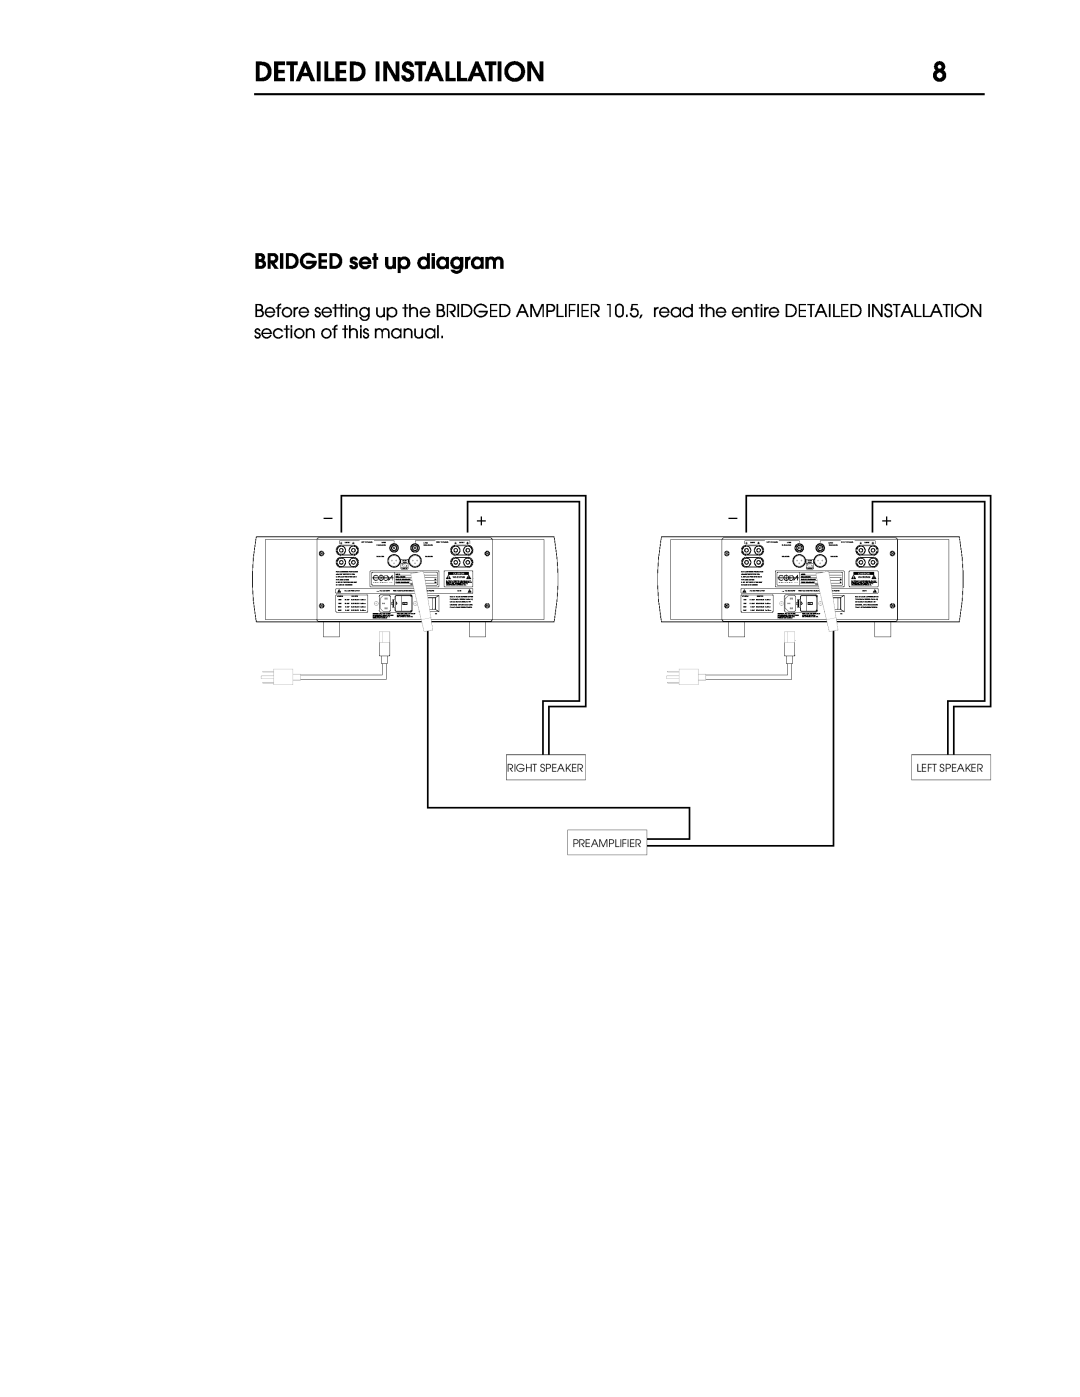 Coda 10.5 operation manual Detailed Installation, BRIDGED set up diagram, Right Speaker, Left Speaker, Preamplifier 